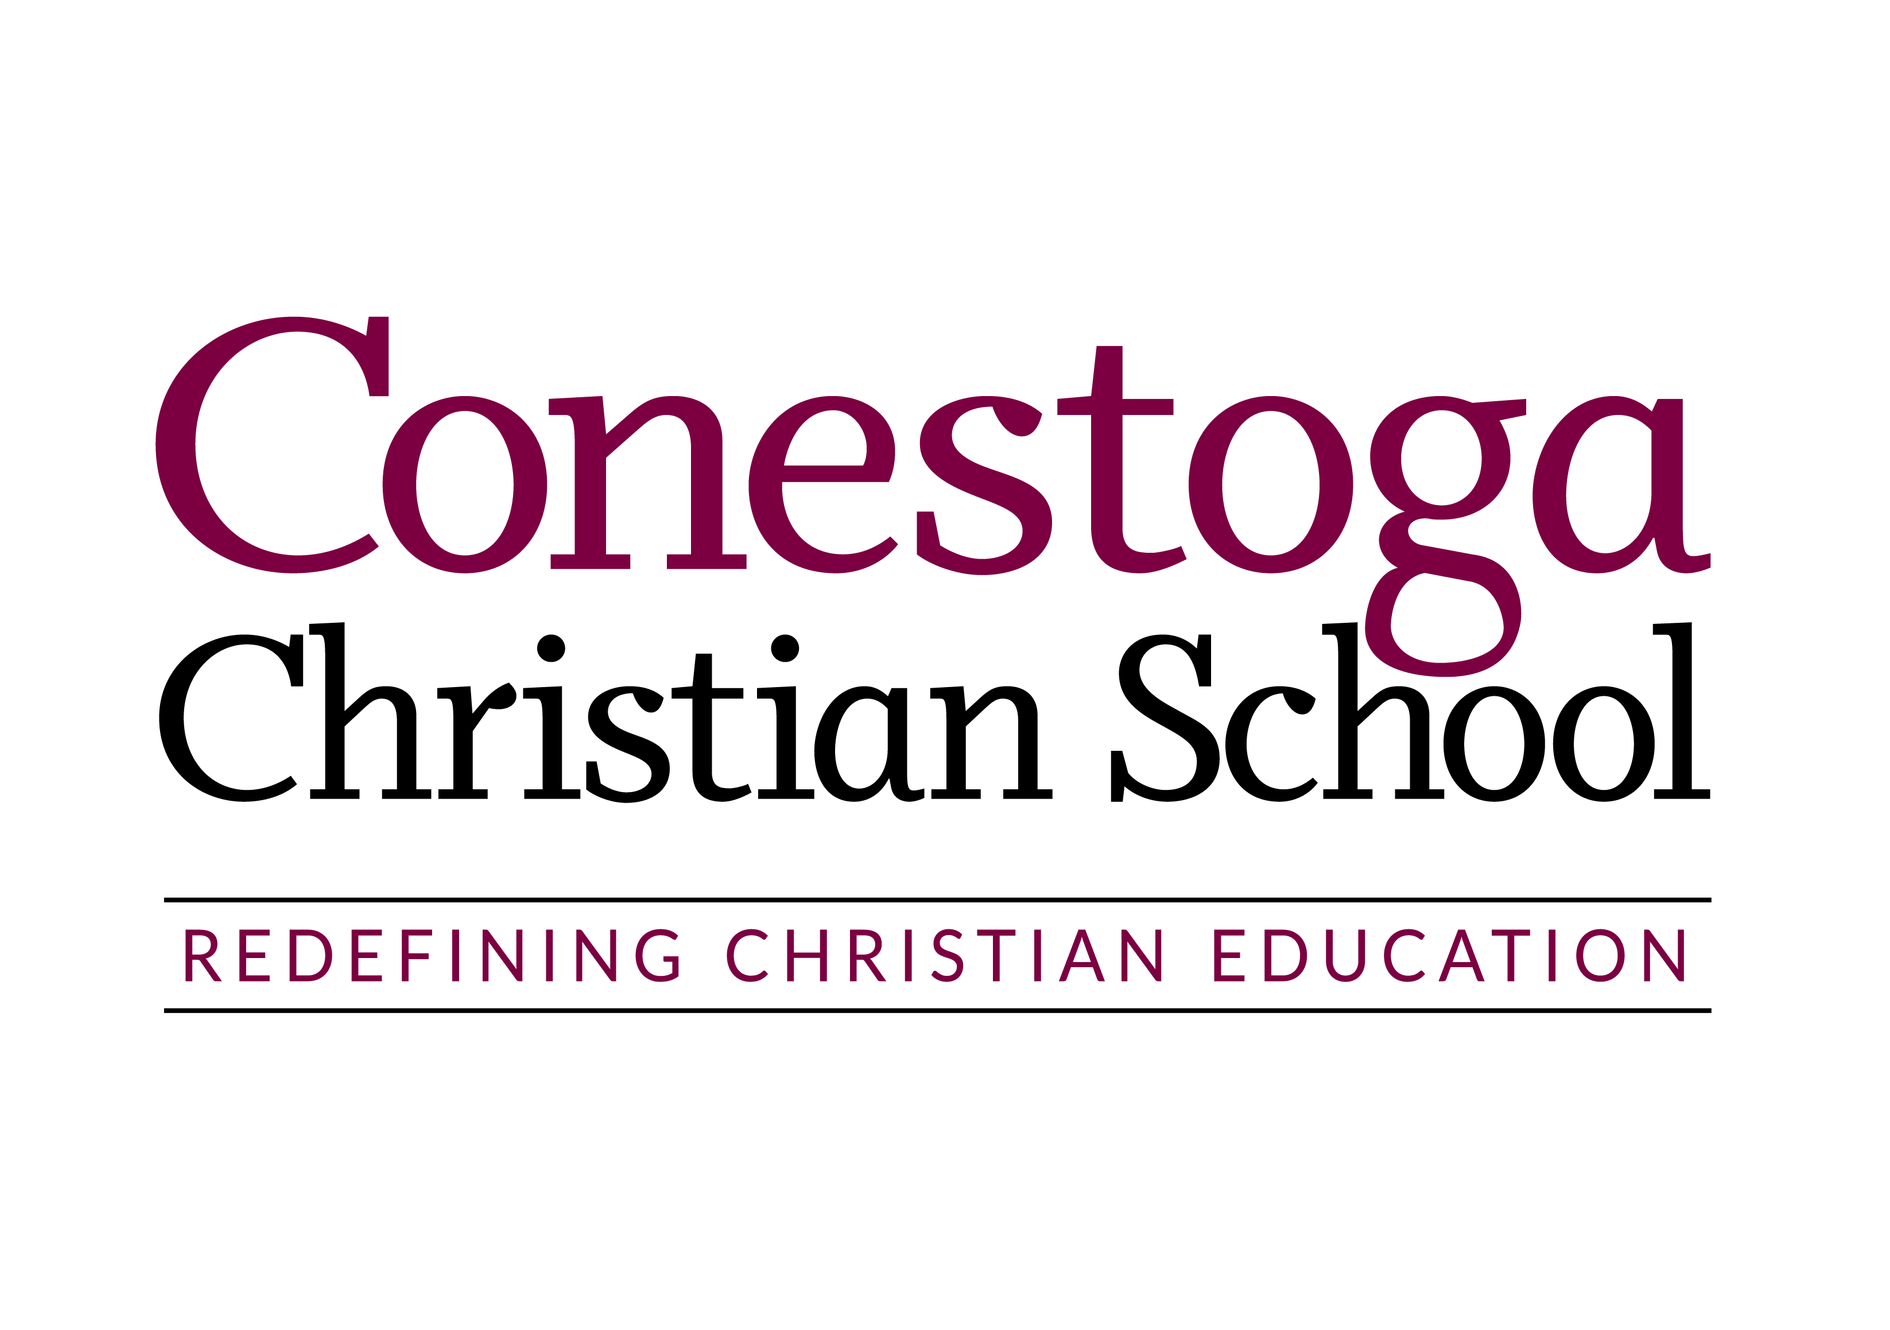 Conestoga Christian School